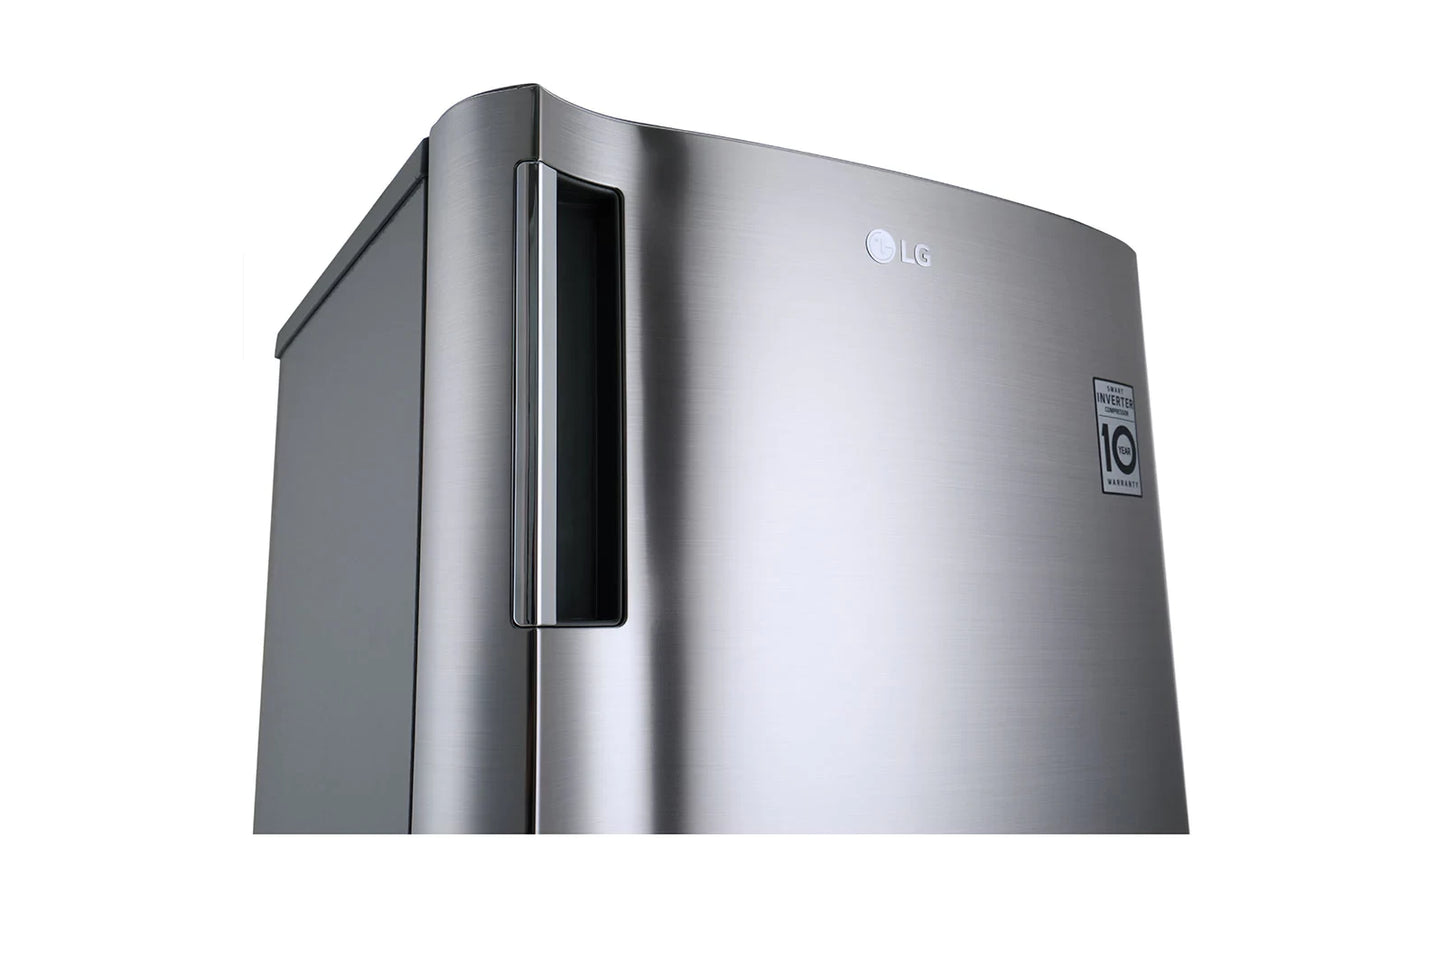 LG GN-304SL 168L Standing Freezer - FRZ 304 SL